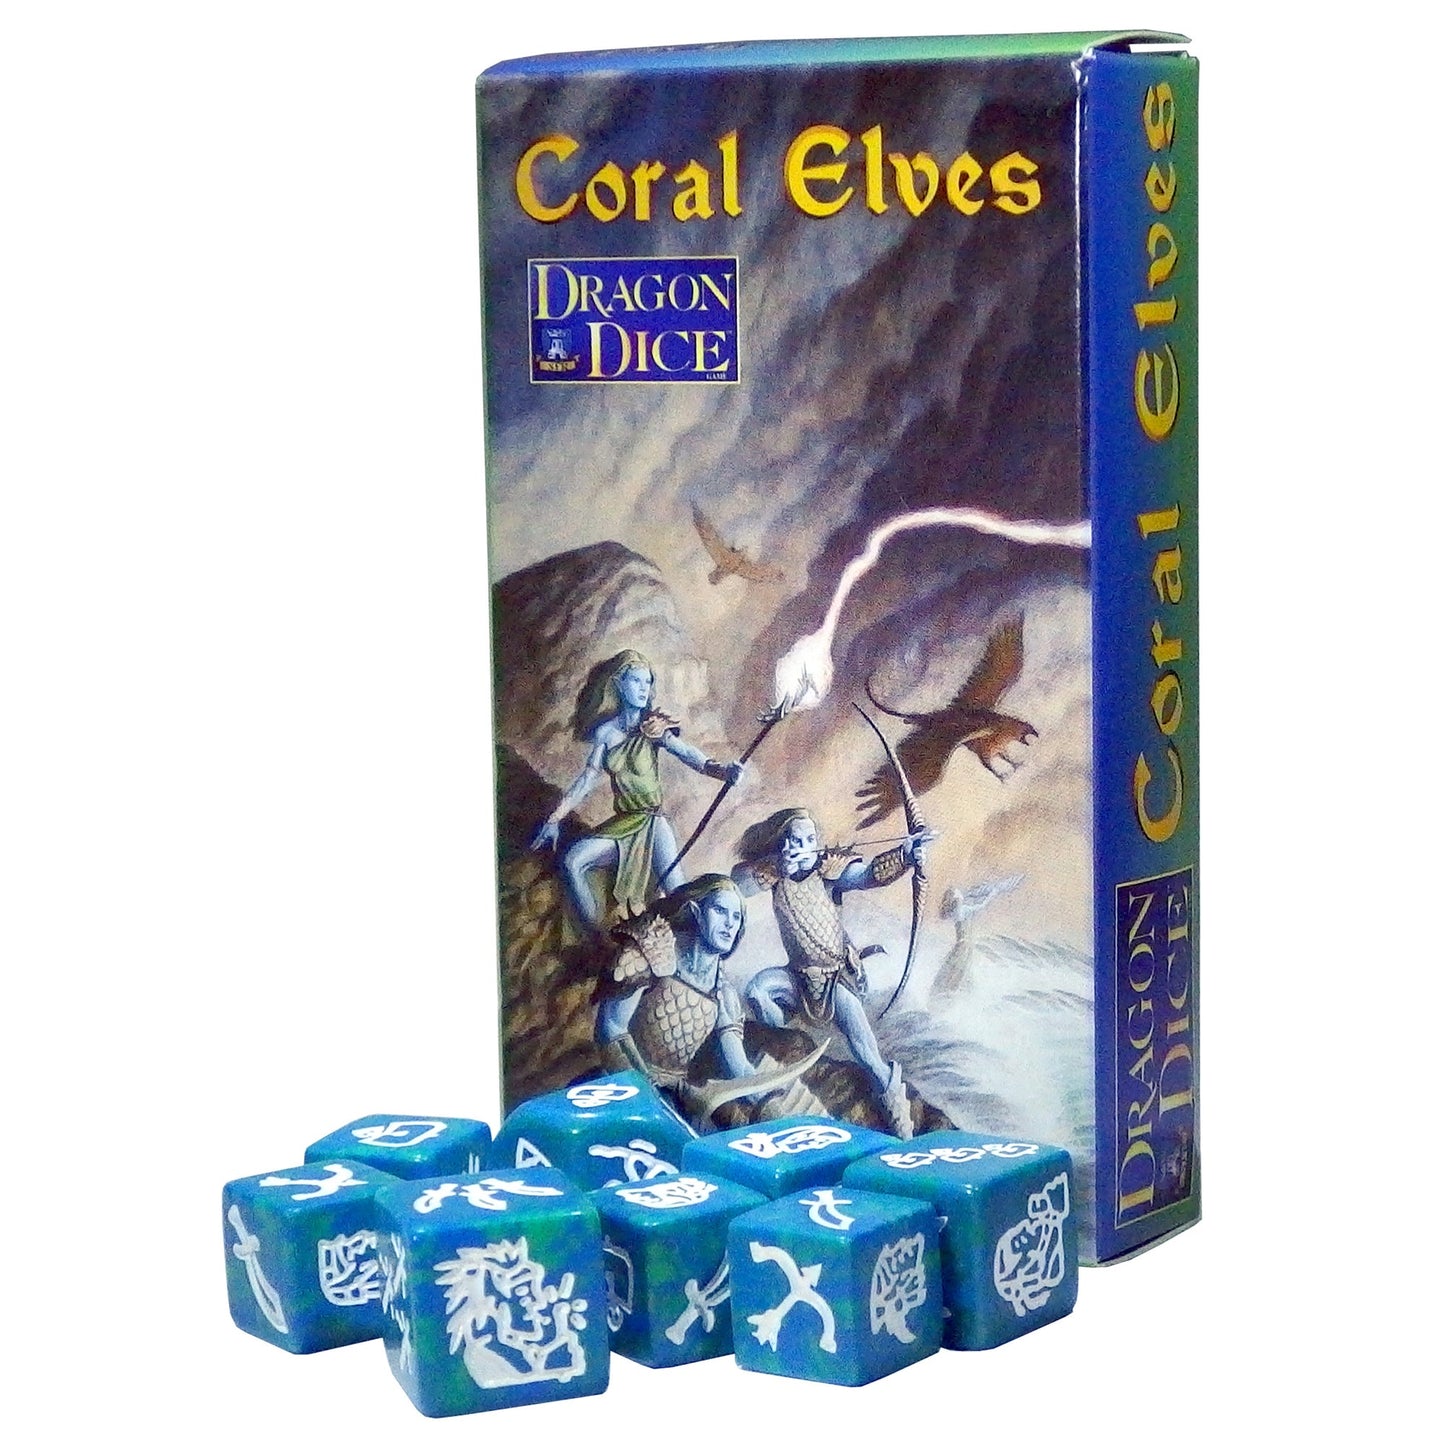 Coral Elves